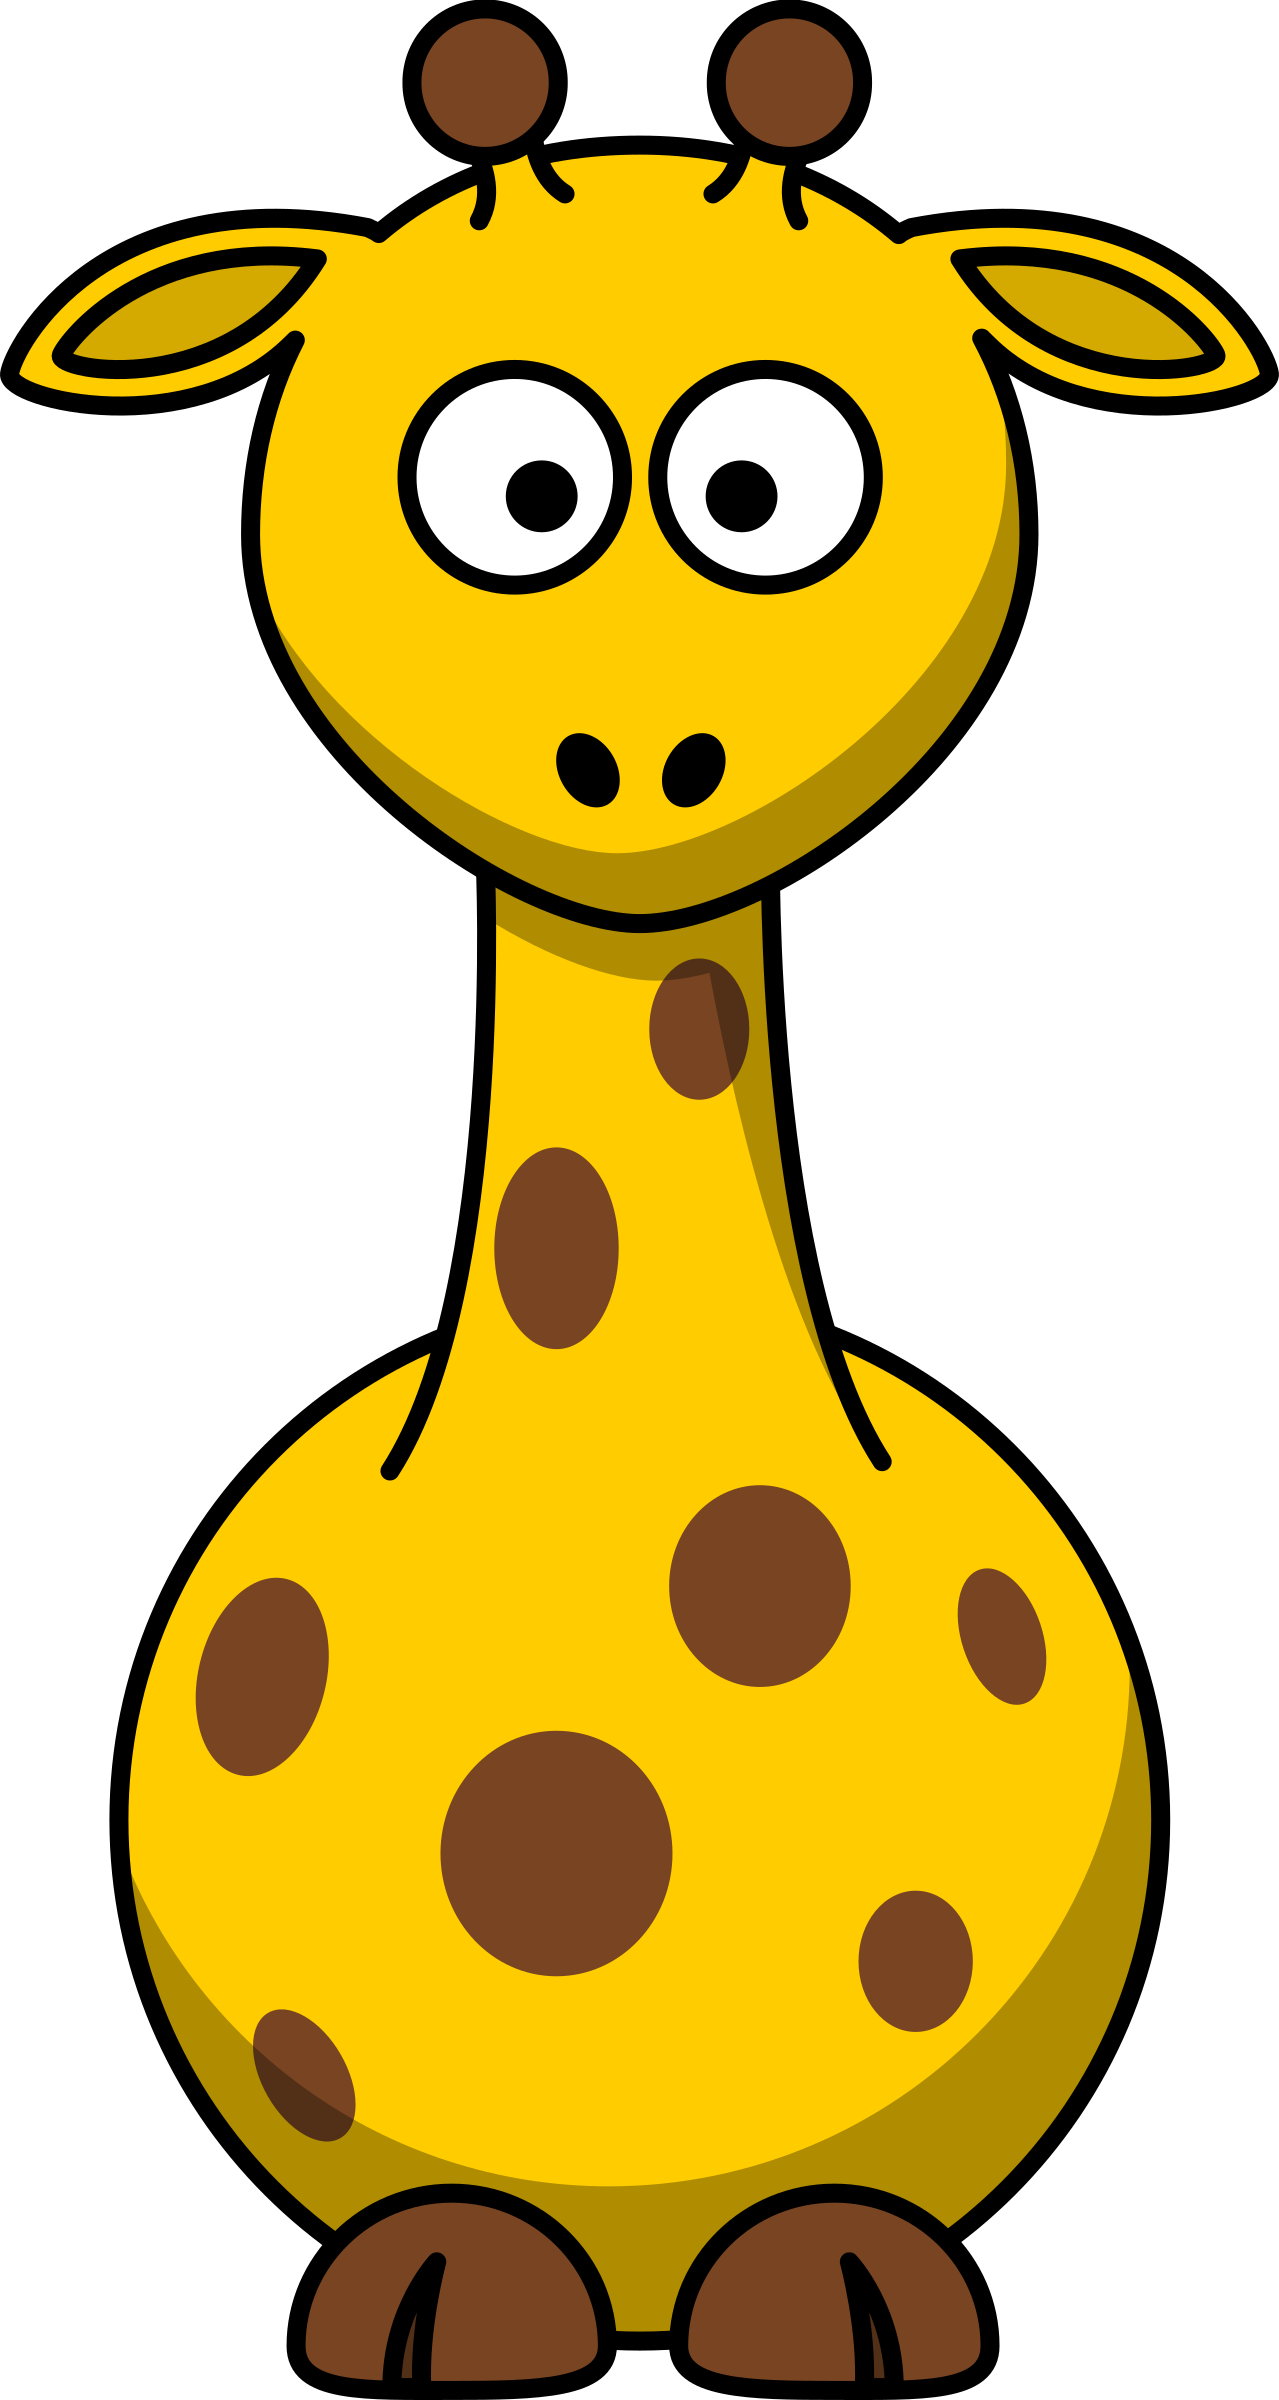 Giraffe big image png. Youtube clipart cartoon